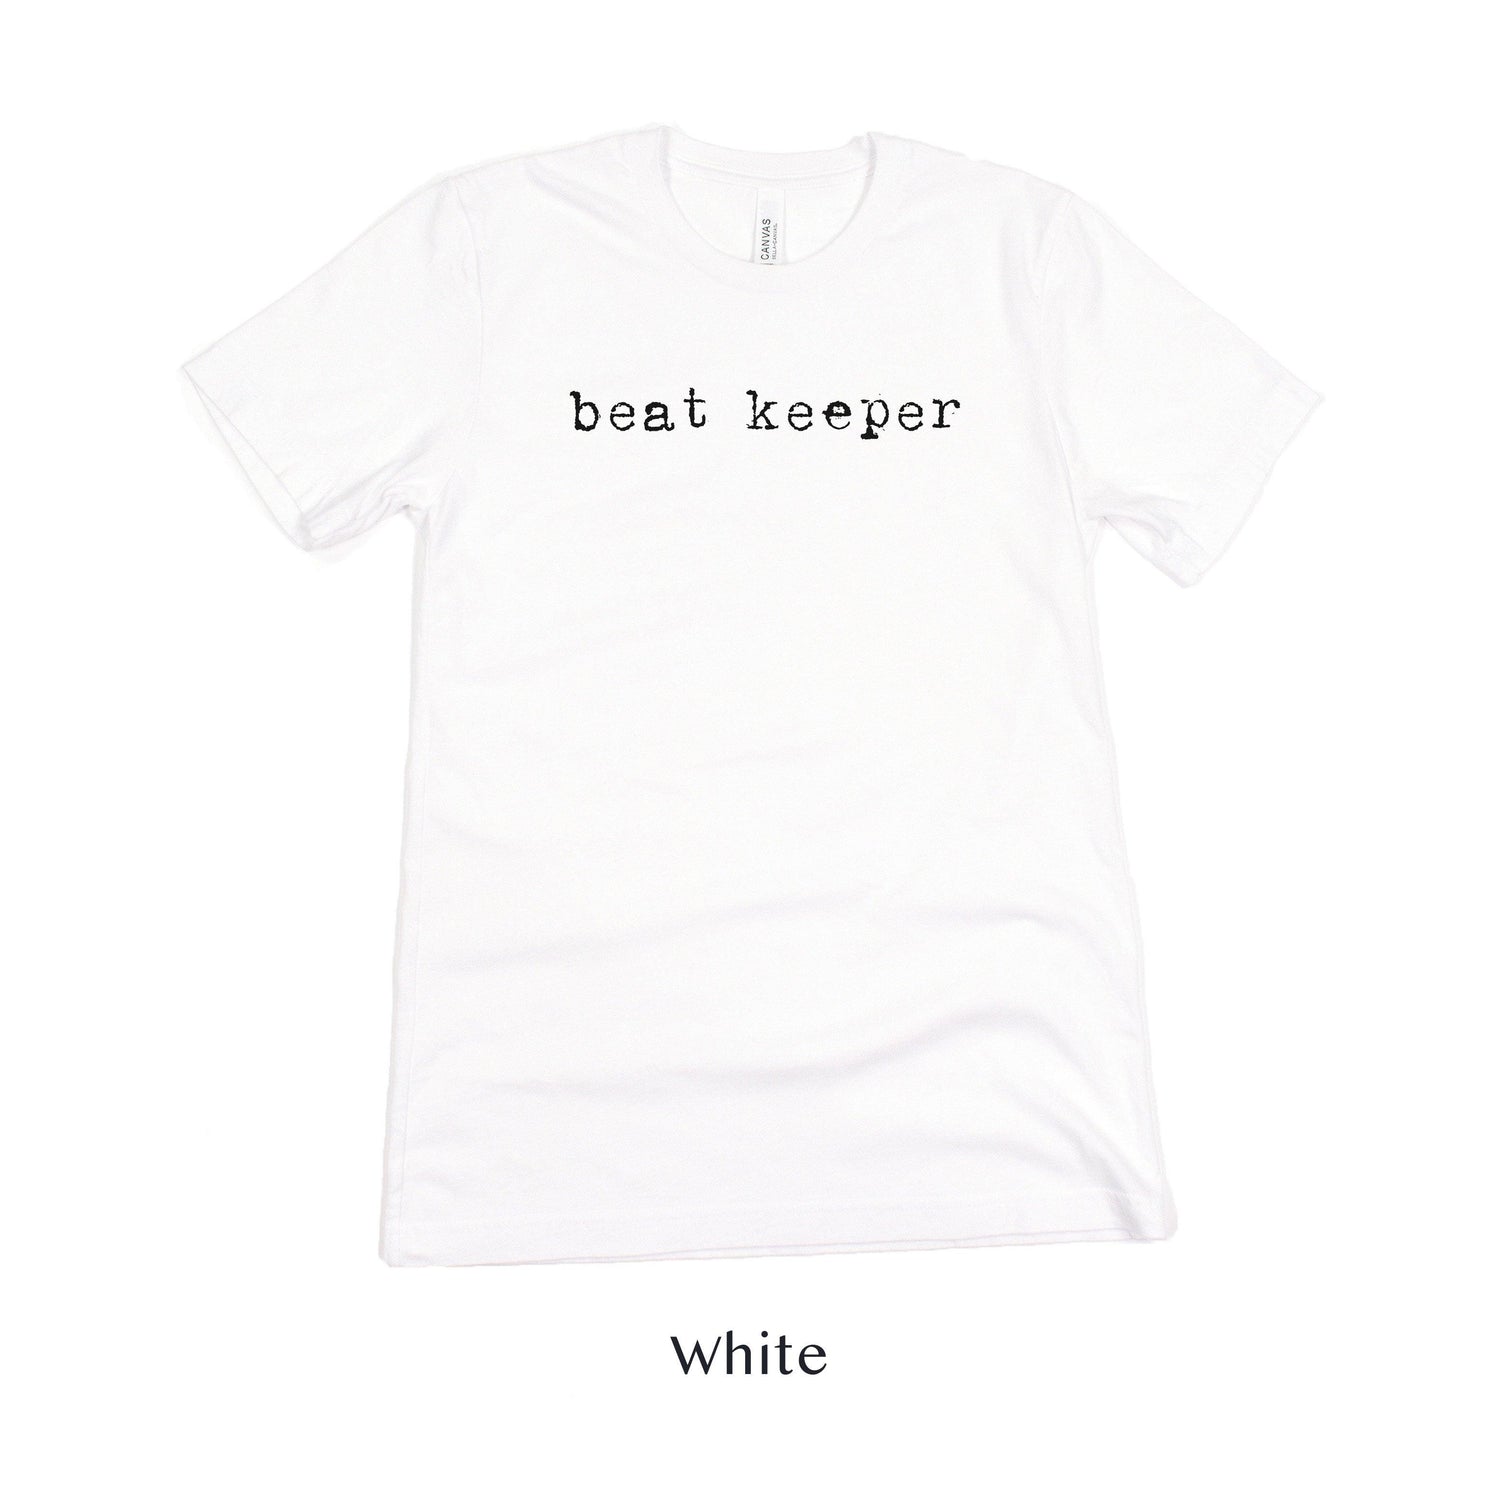 Beat Keeper - Wedding DJ Short-sleeve Tee by Oaklynn Lane - white shirt